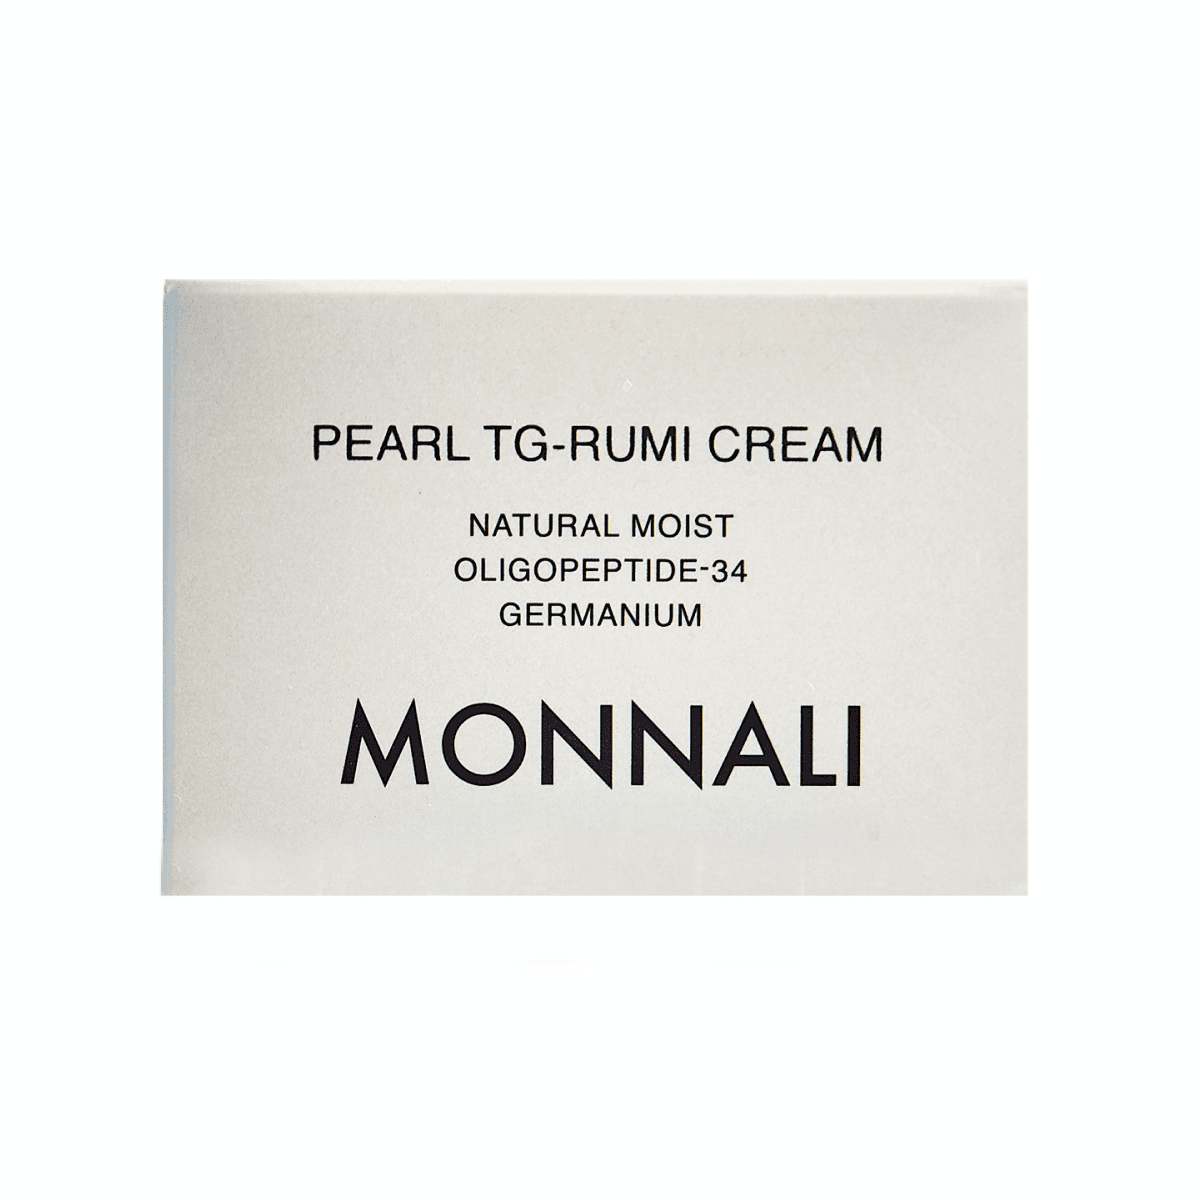 Pearl TG-Rumi cream